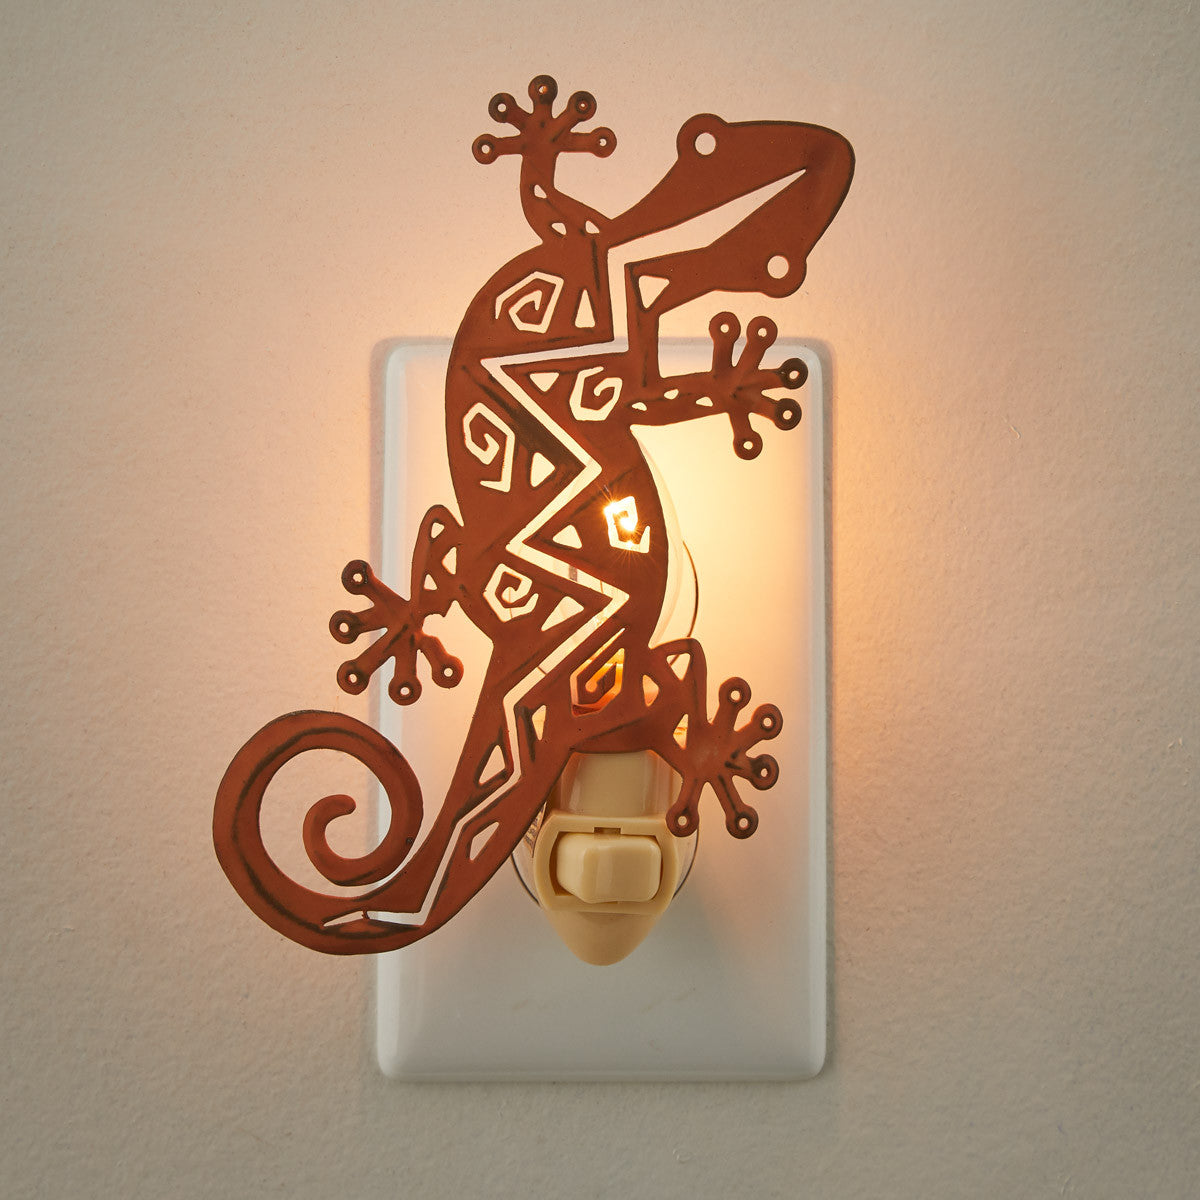 Gecko Night Light - Orange Park Designs